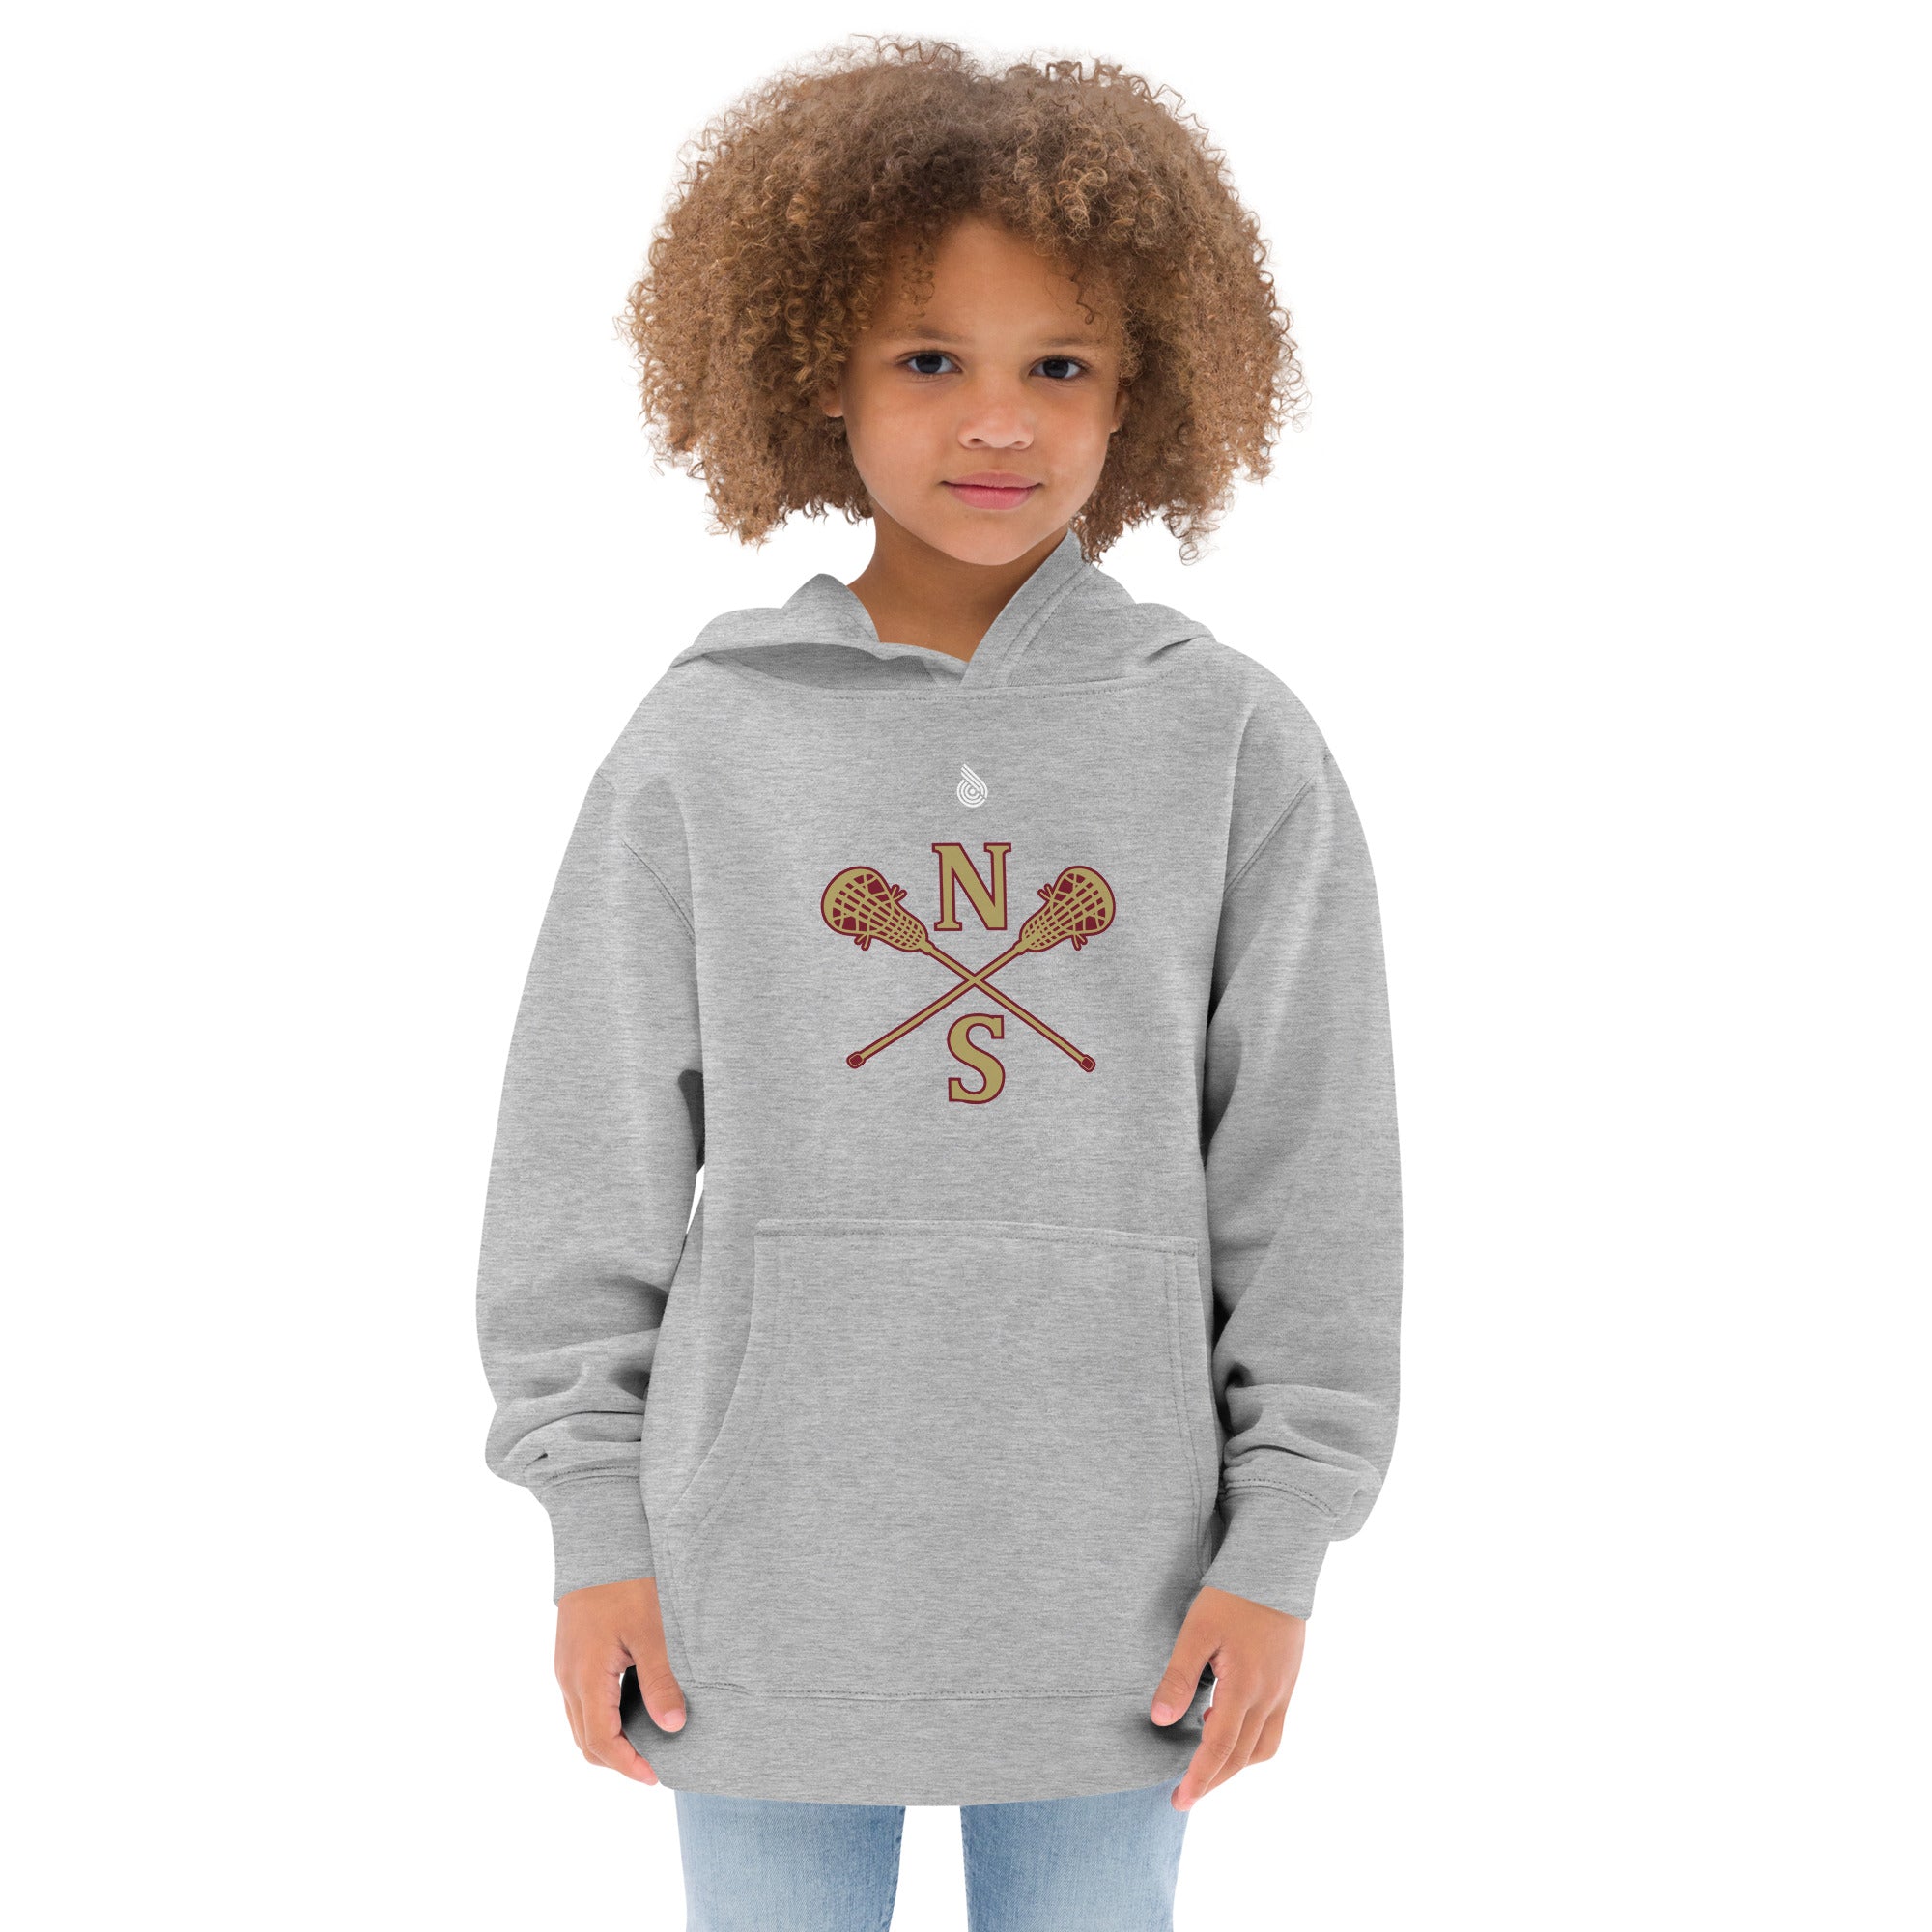 N-S Kids fleece hoodie (Girls Logo)